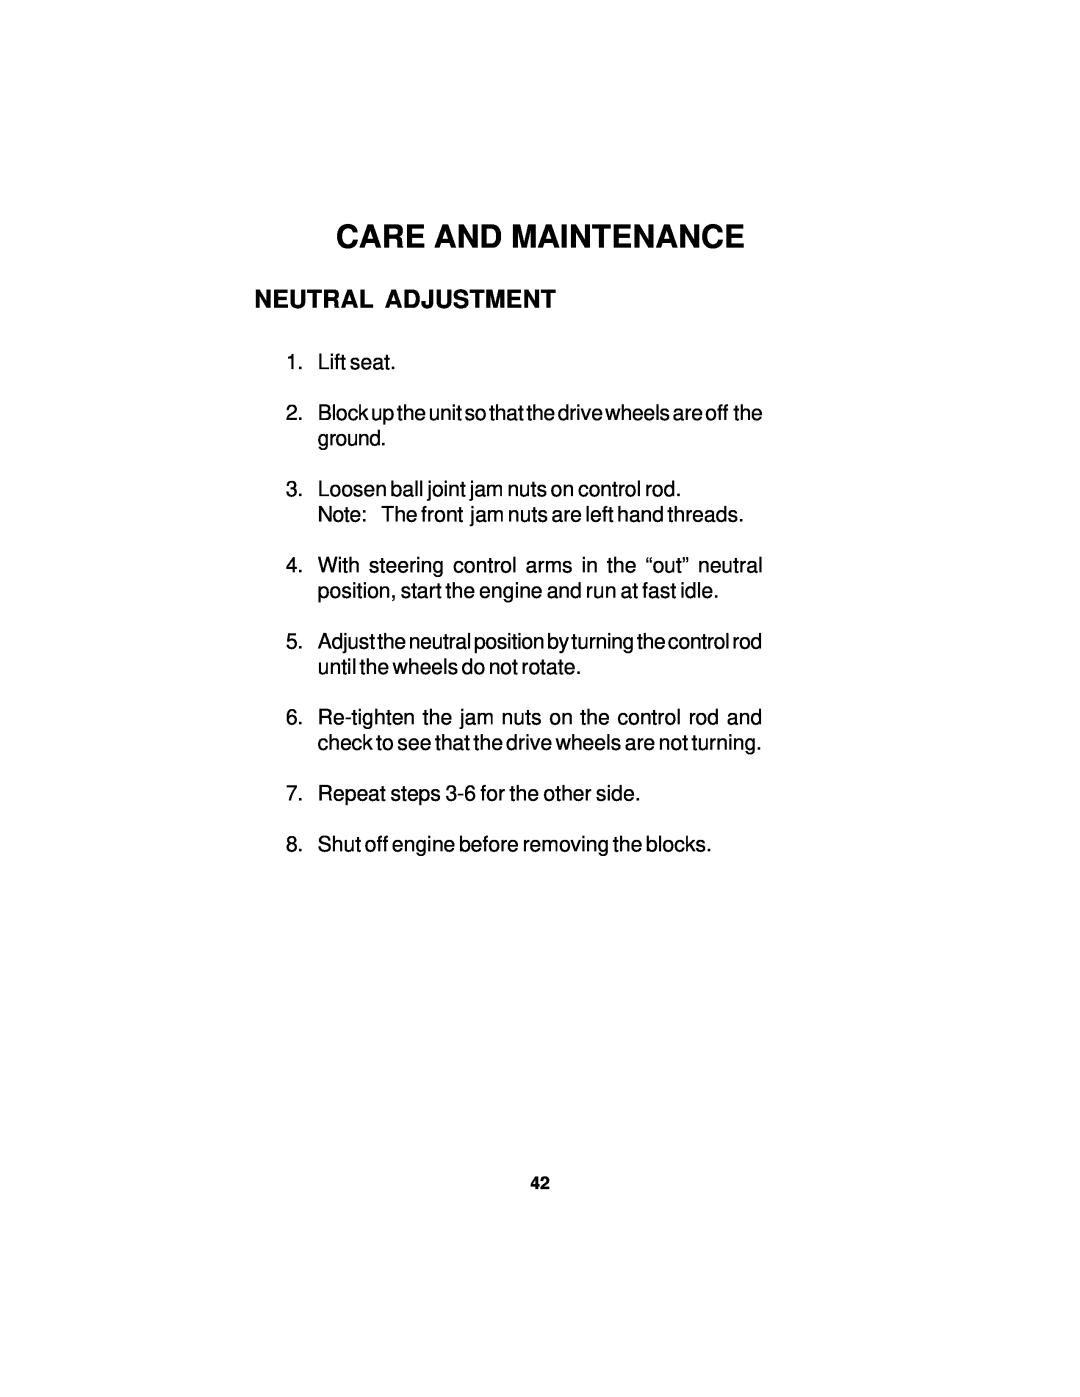 Dixon 18124-0804 manual Neutral Adjustment, Care And Maintenance 